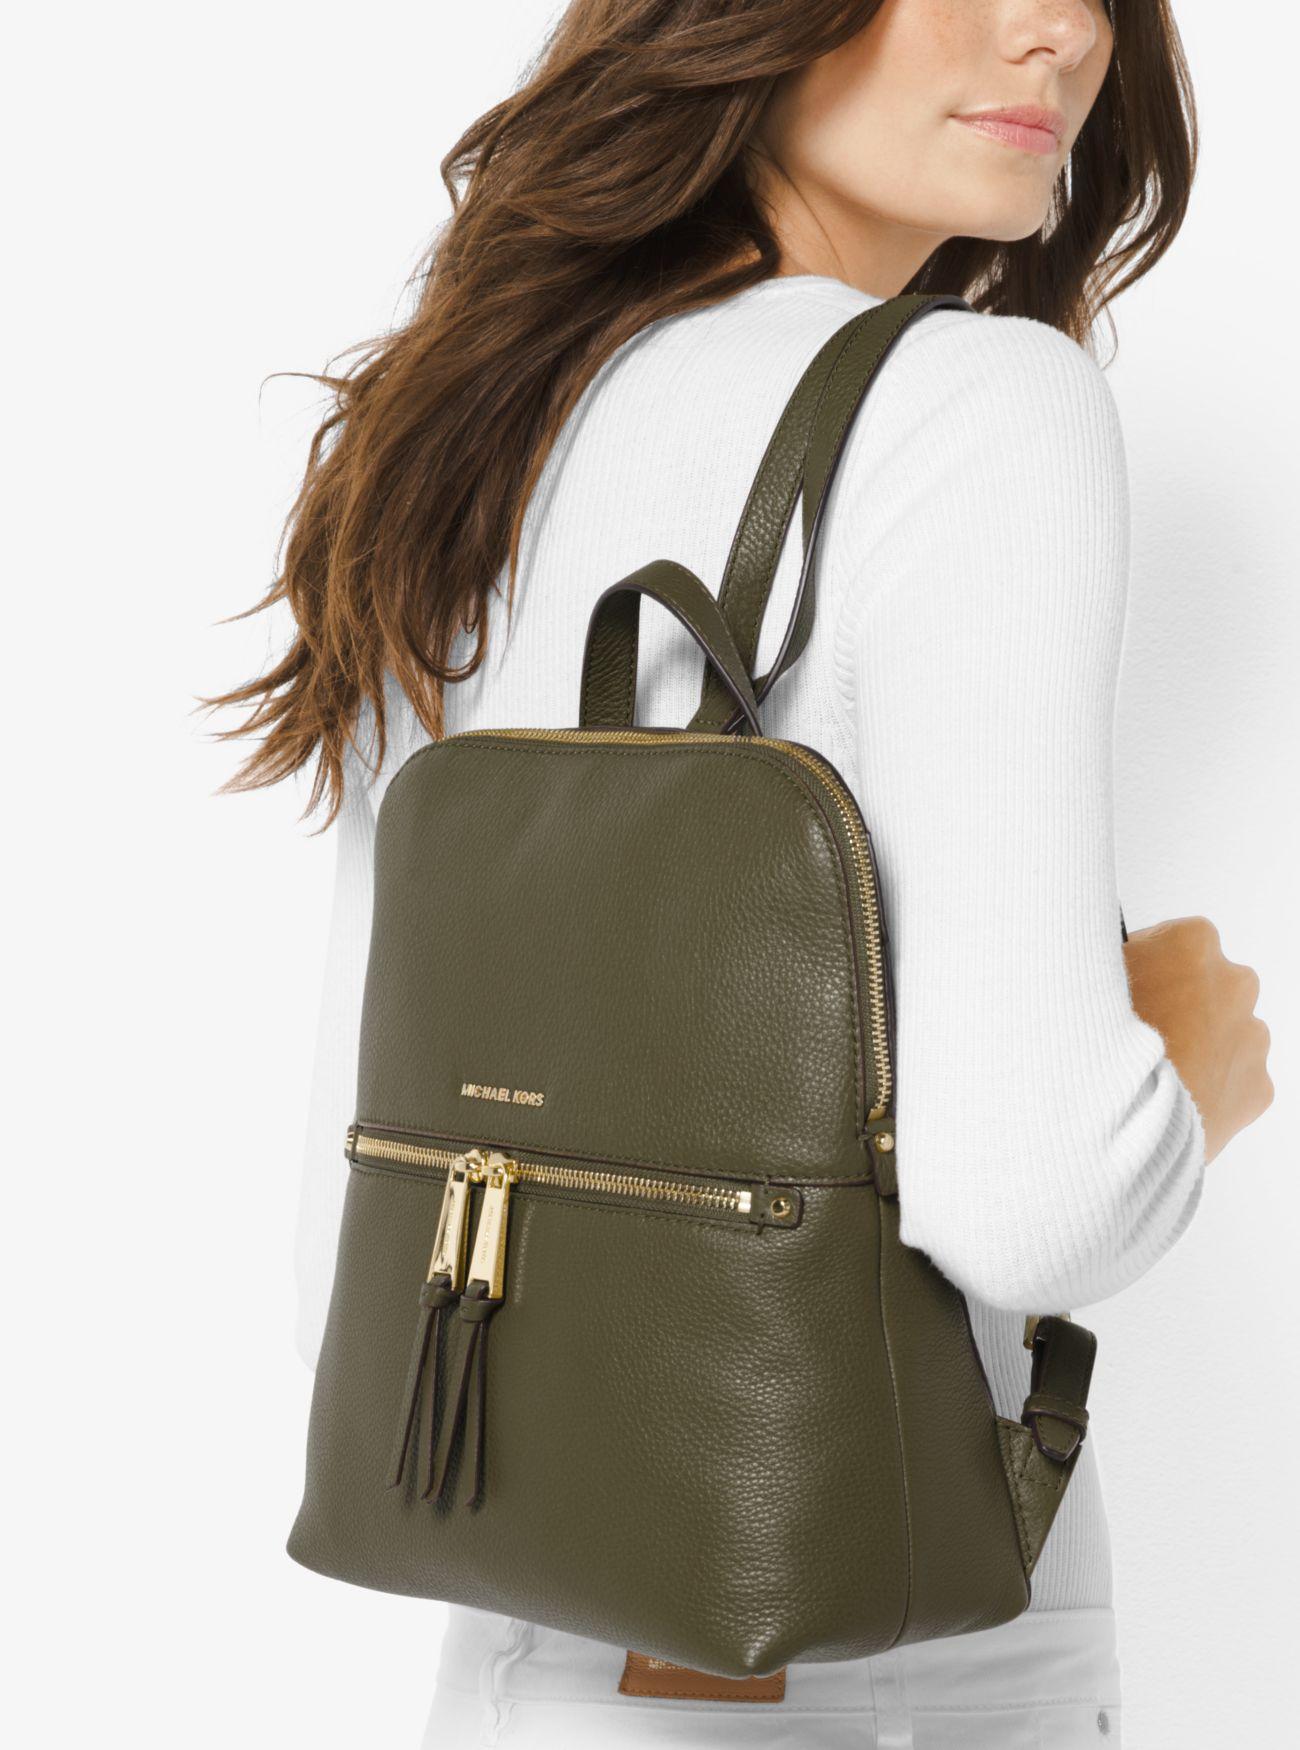 Buy VELEZ Leather Backpack for Men - 15 Inch Laptop Bag - Business Travel  Daypack - Slim Designer Bookbag, 04 Black Matte at Amazon.in